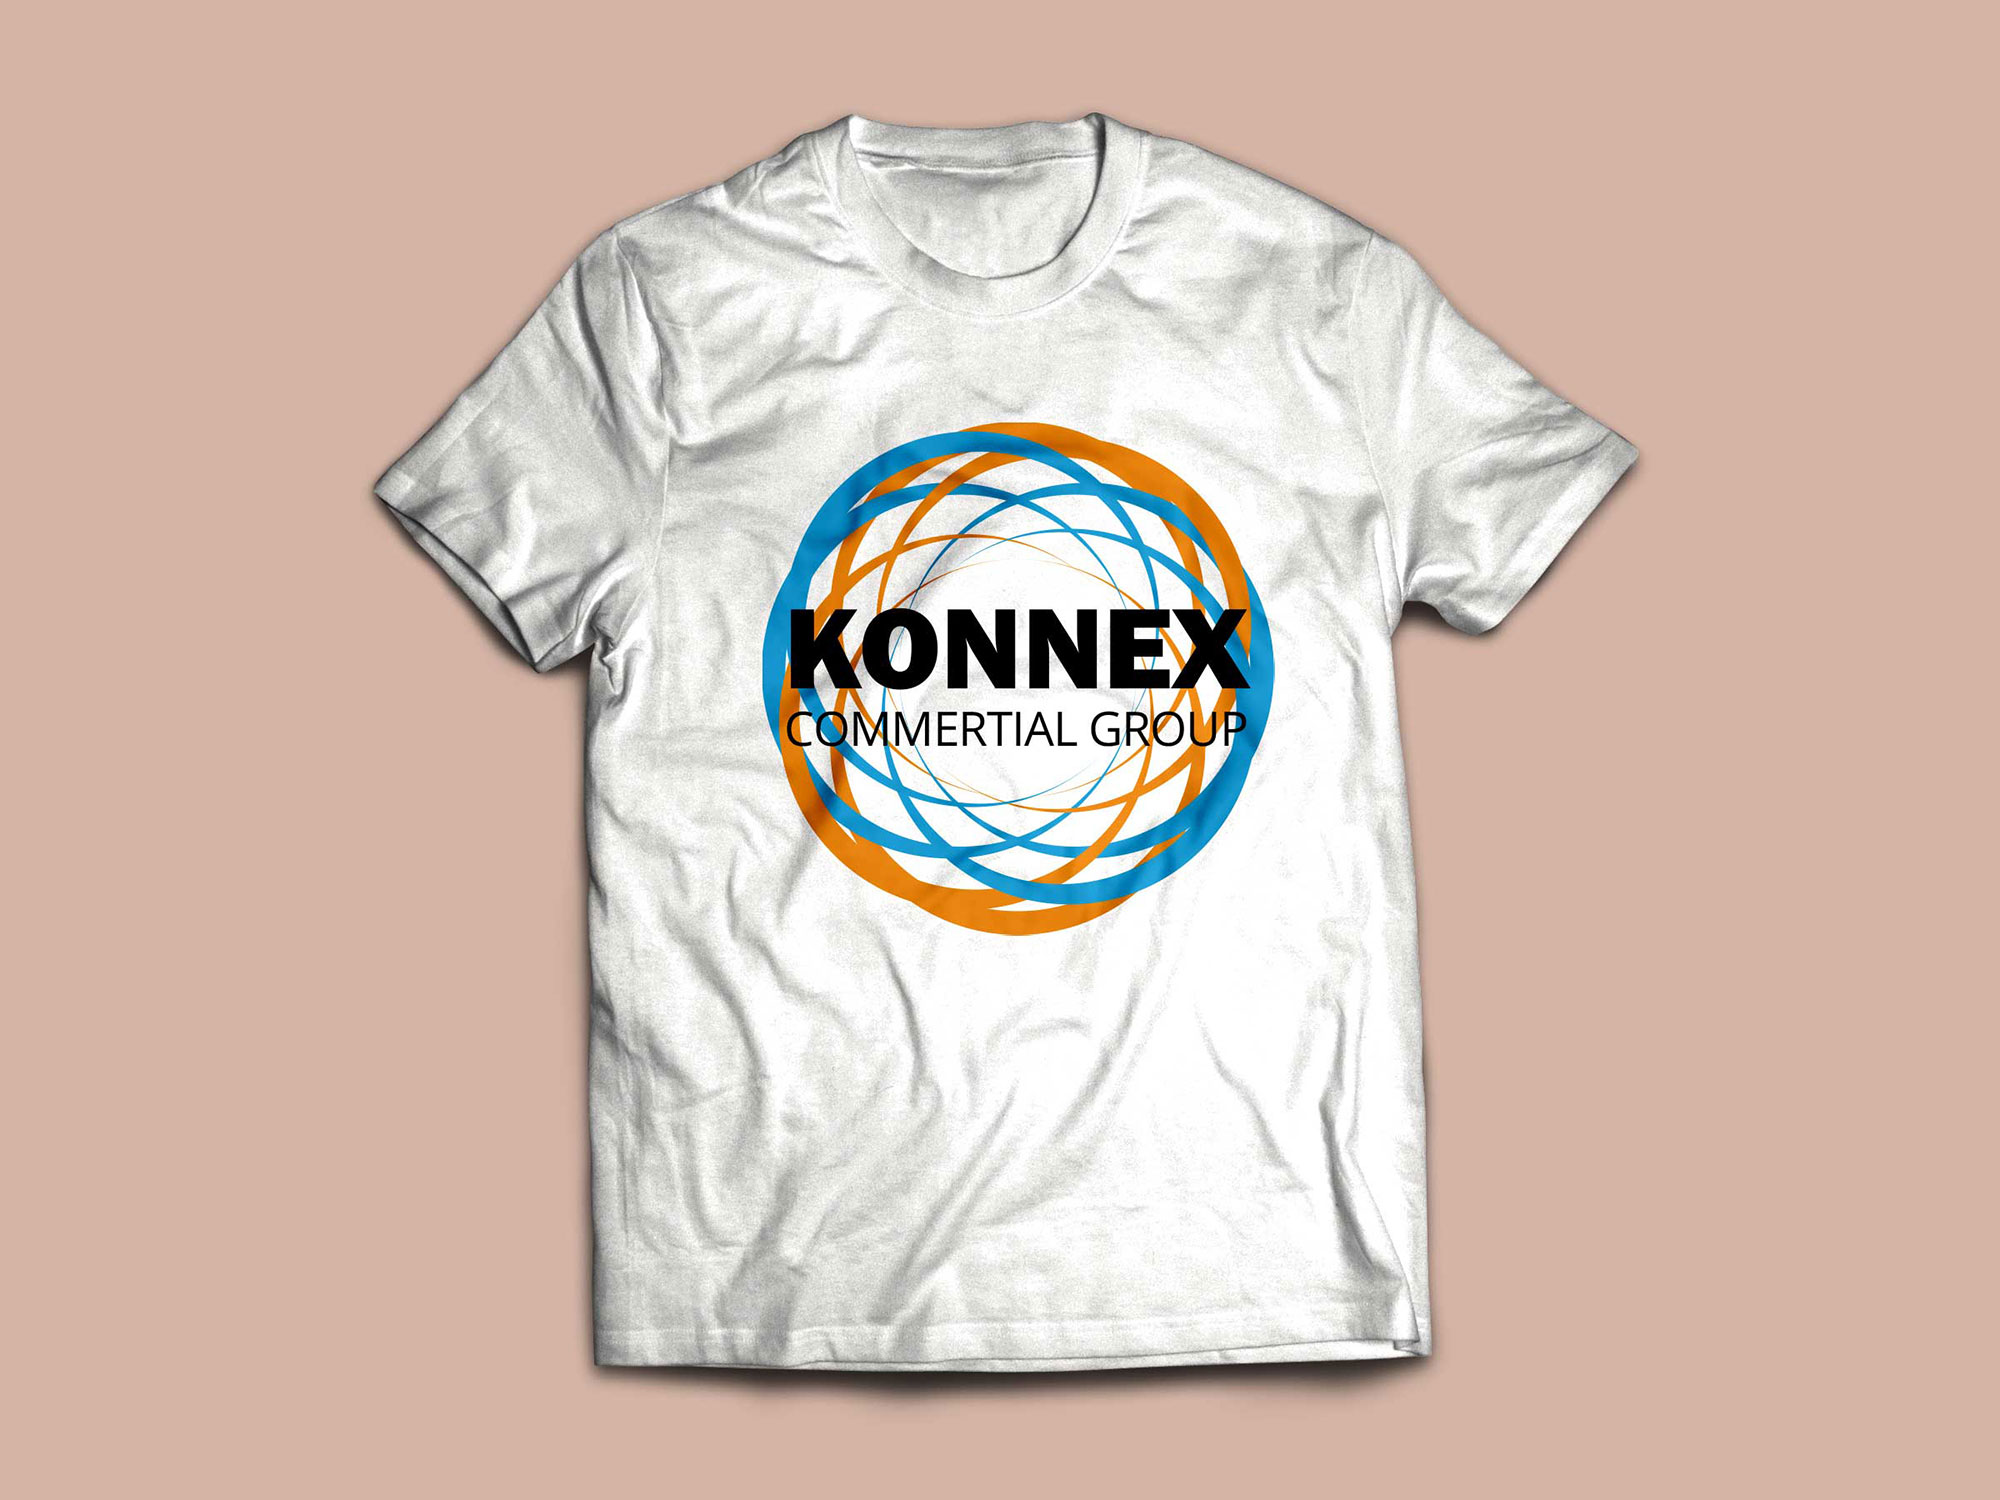 Hector Cruet Konnex Comertial Group Tshirt